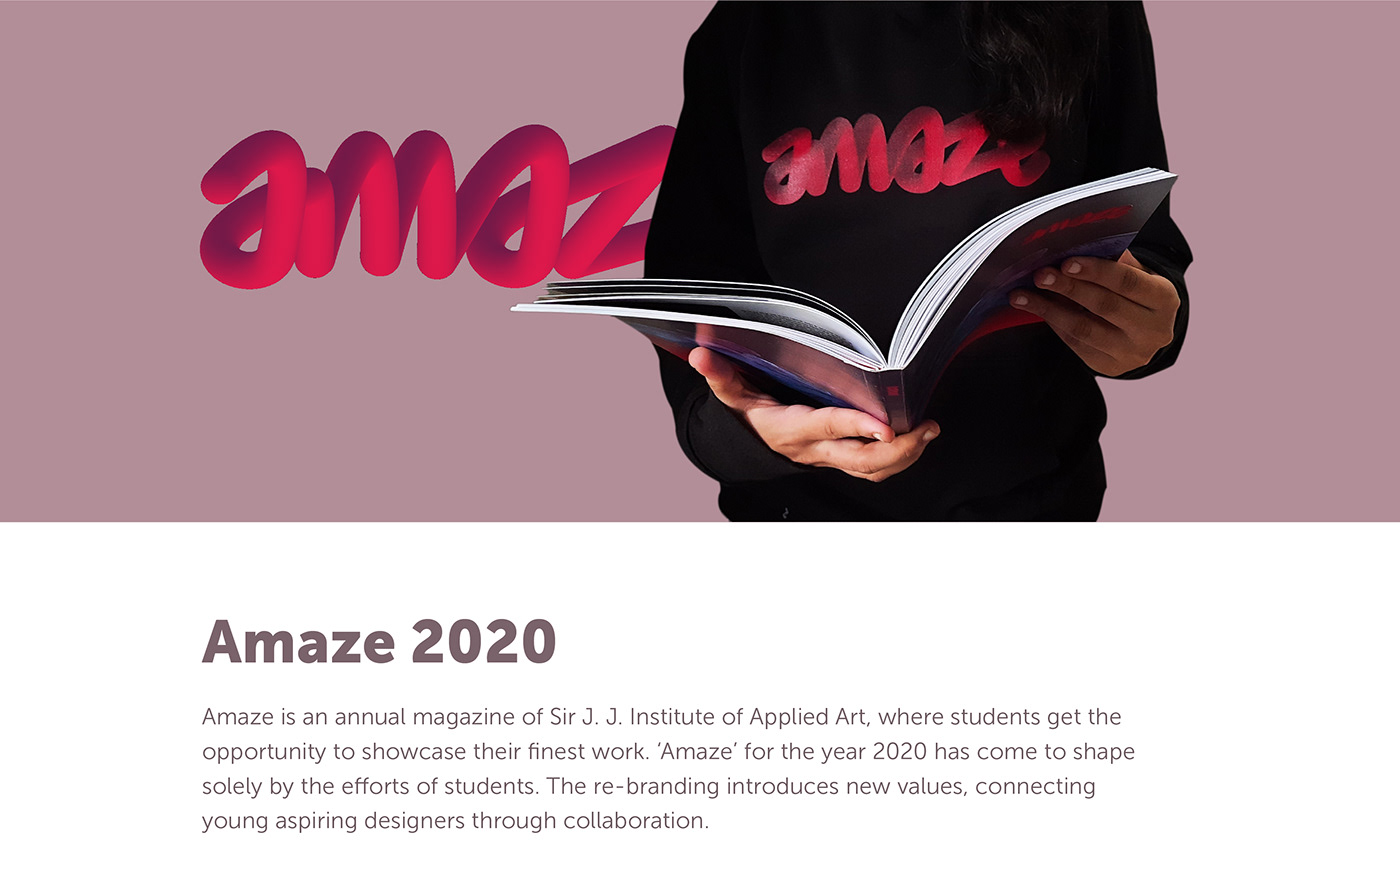 An annual magazine named 'Amaze' 